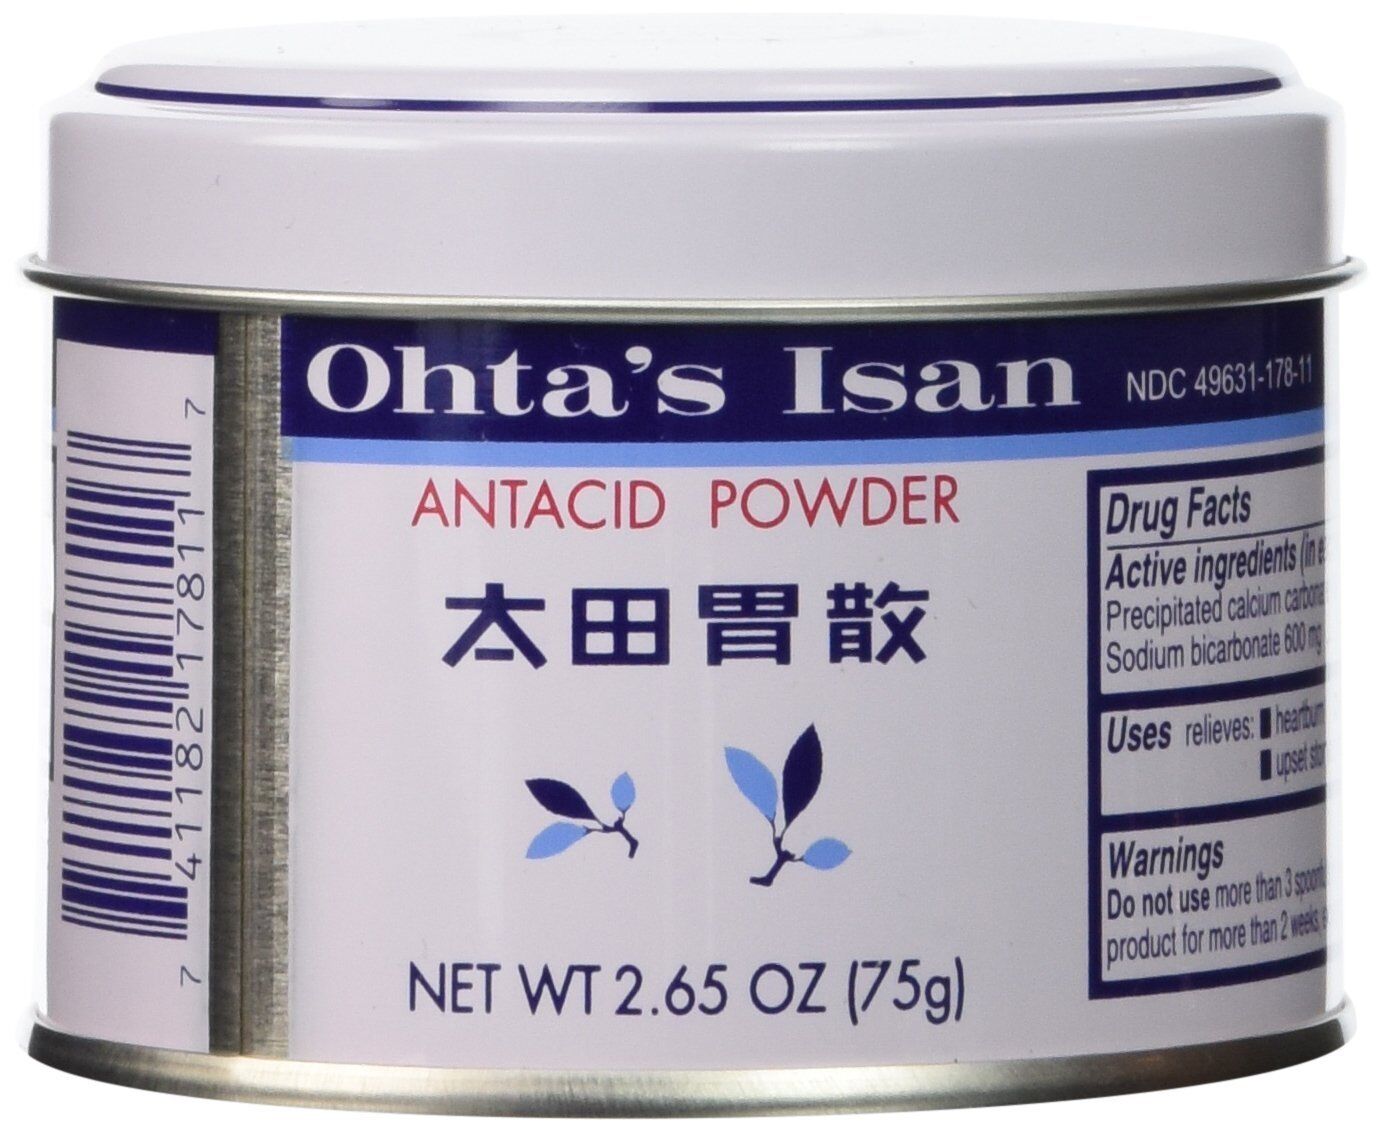 Ohta's Isan Antacid Powder 75g Pack of 2